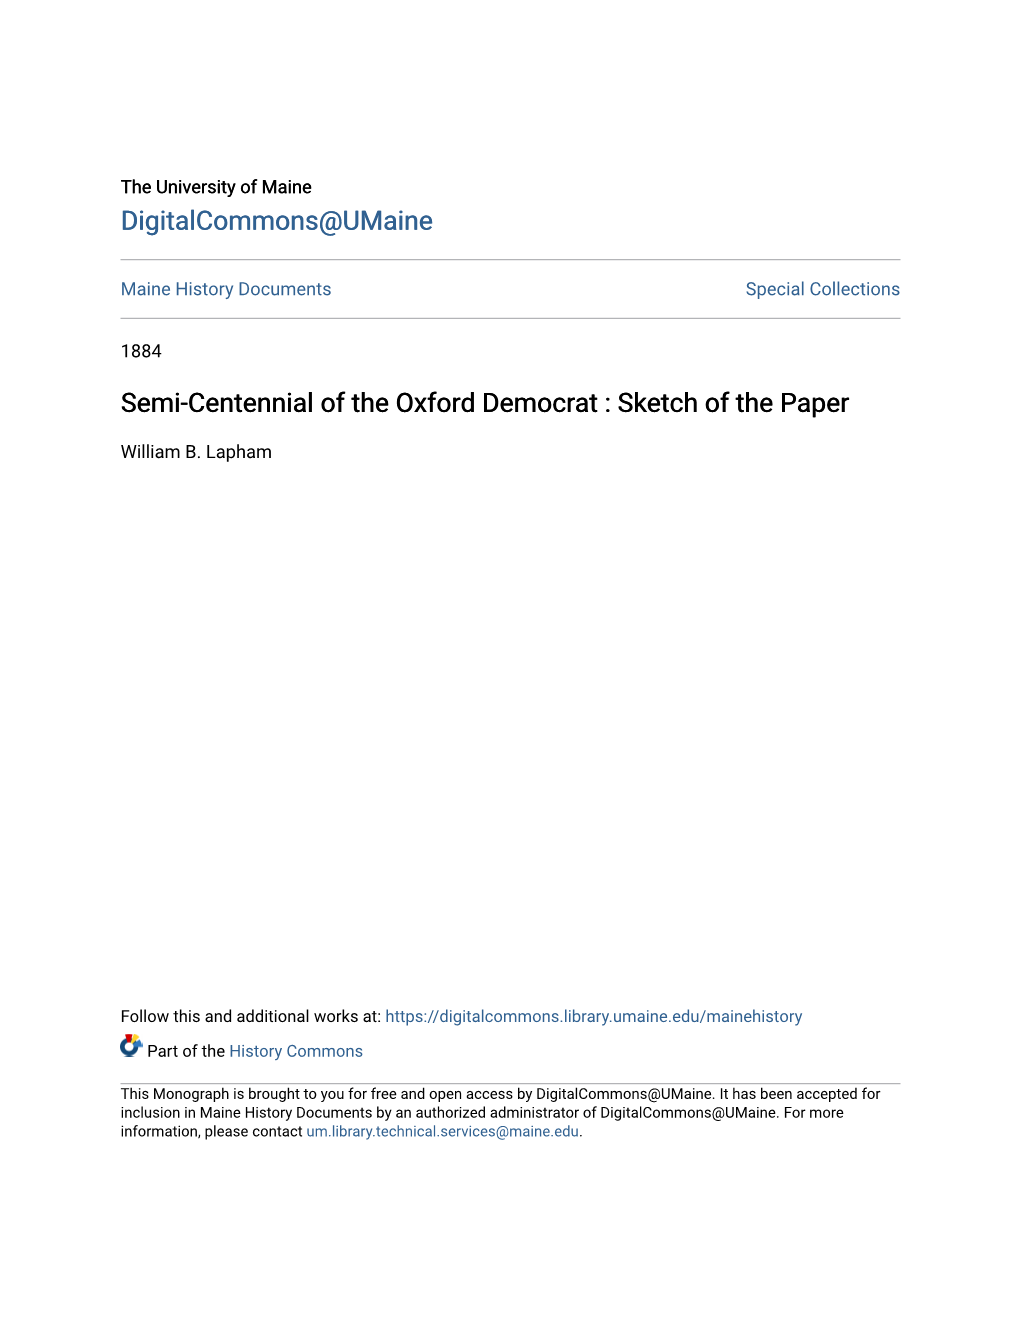 Semi-Centennial of the Oxford Democrat : Sketch of the Paper